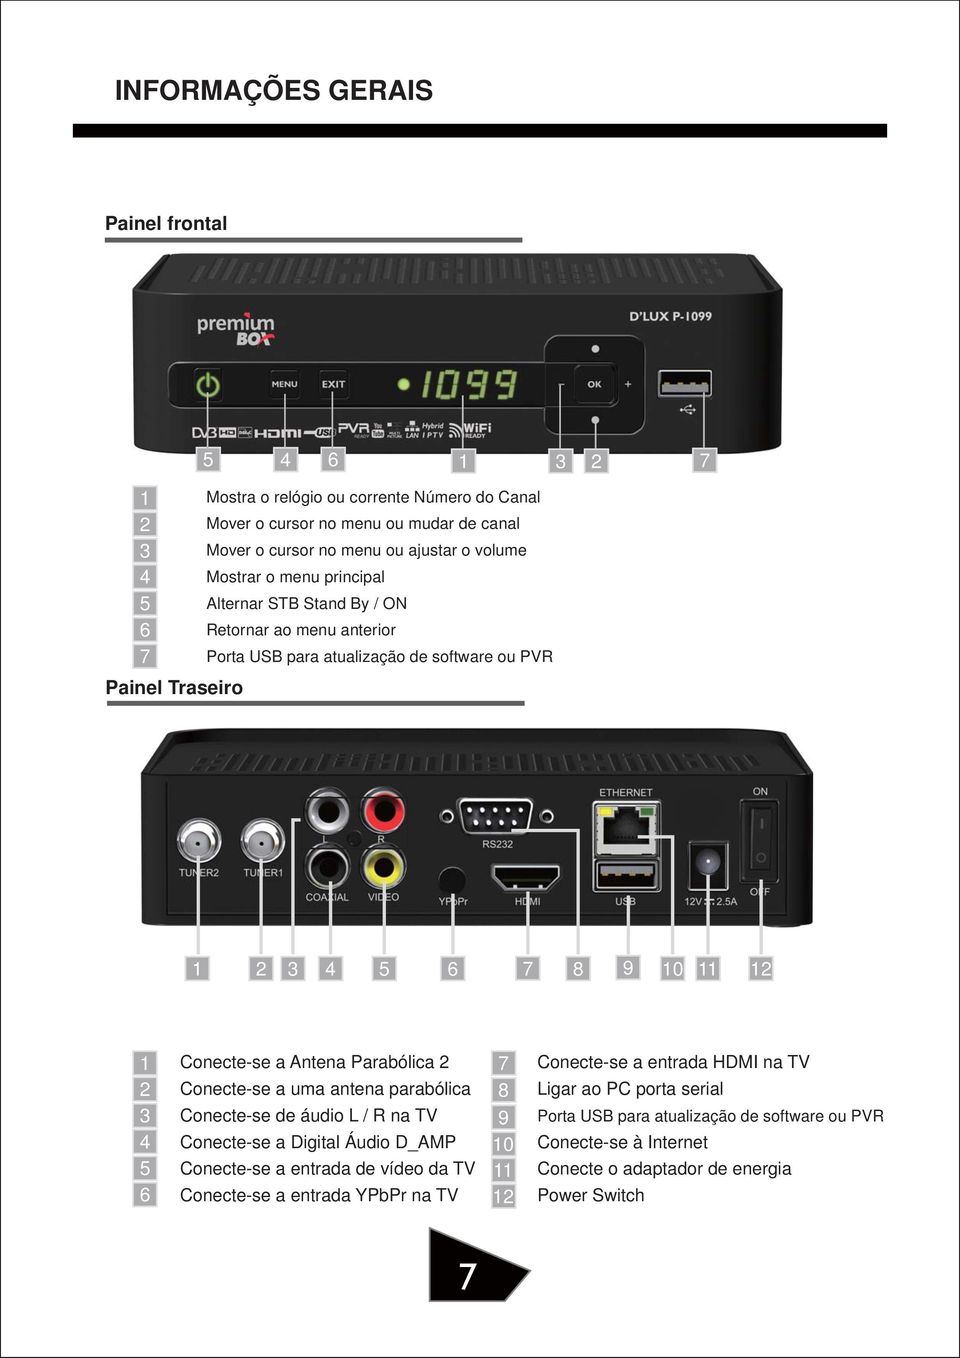 Conecte-se a Antena Parabólica 2 Conecte-se a uma antena parabólica Conecte-se de áudio L / R na TV Conecte-se a Digital Áudio D_AMP Conecte-se a entrada de vídeo da TV Conecte-se a entrada